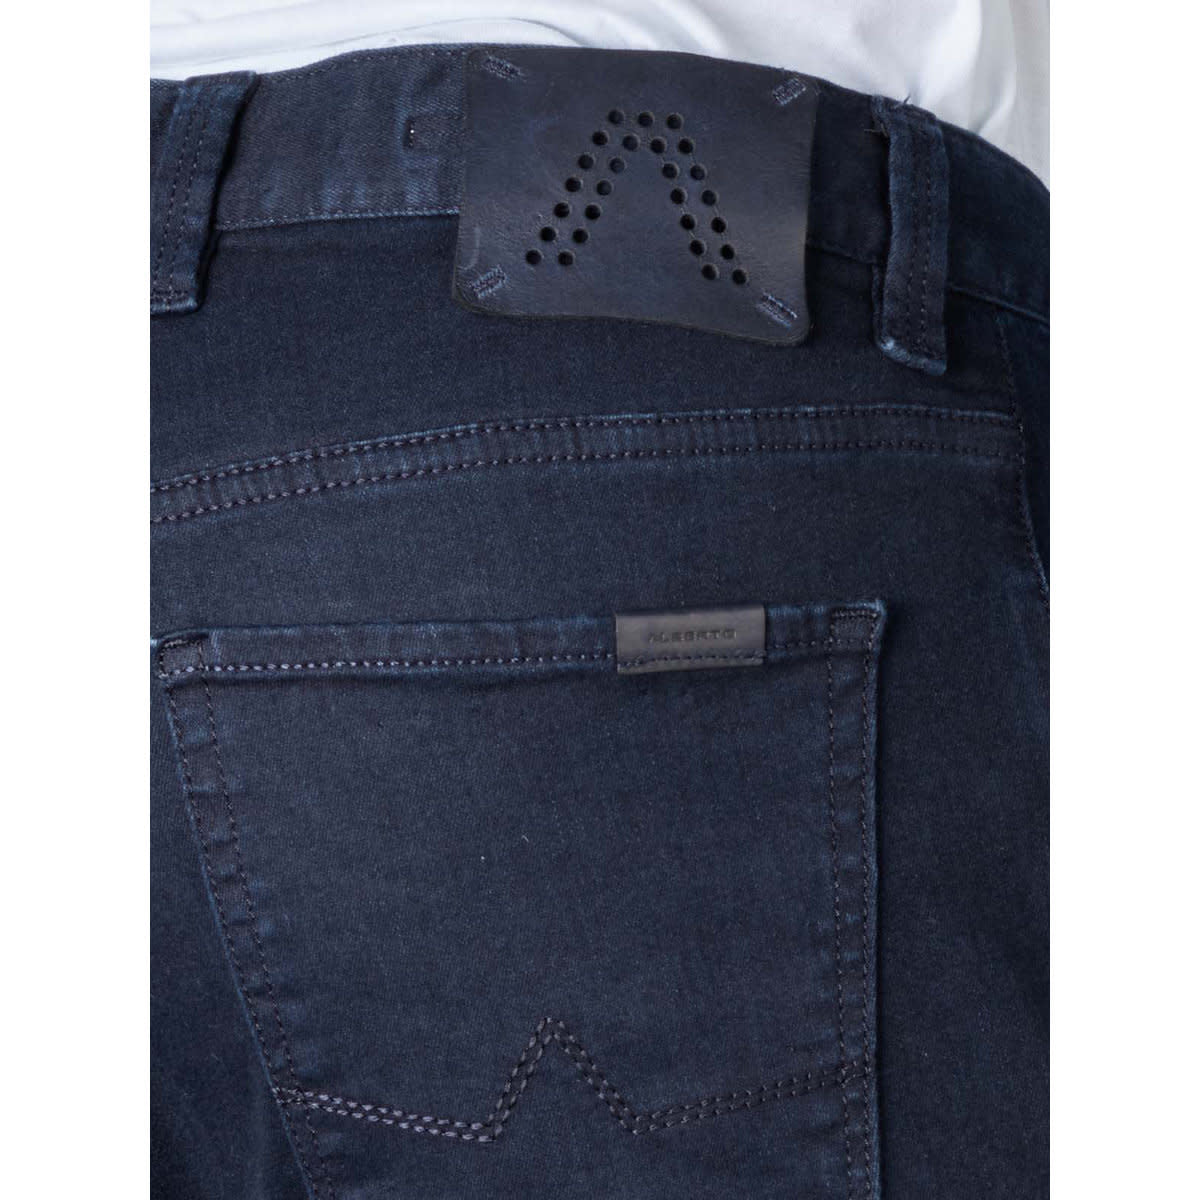 Alberto Pipe Regular Slim Fit Superfit Dual Fx Denim - Dark Blue - 11 - Bottoms - Jeans